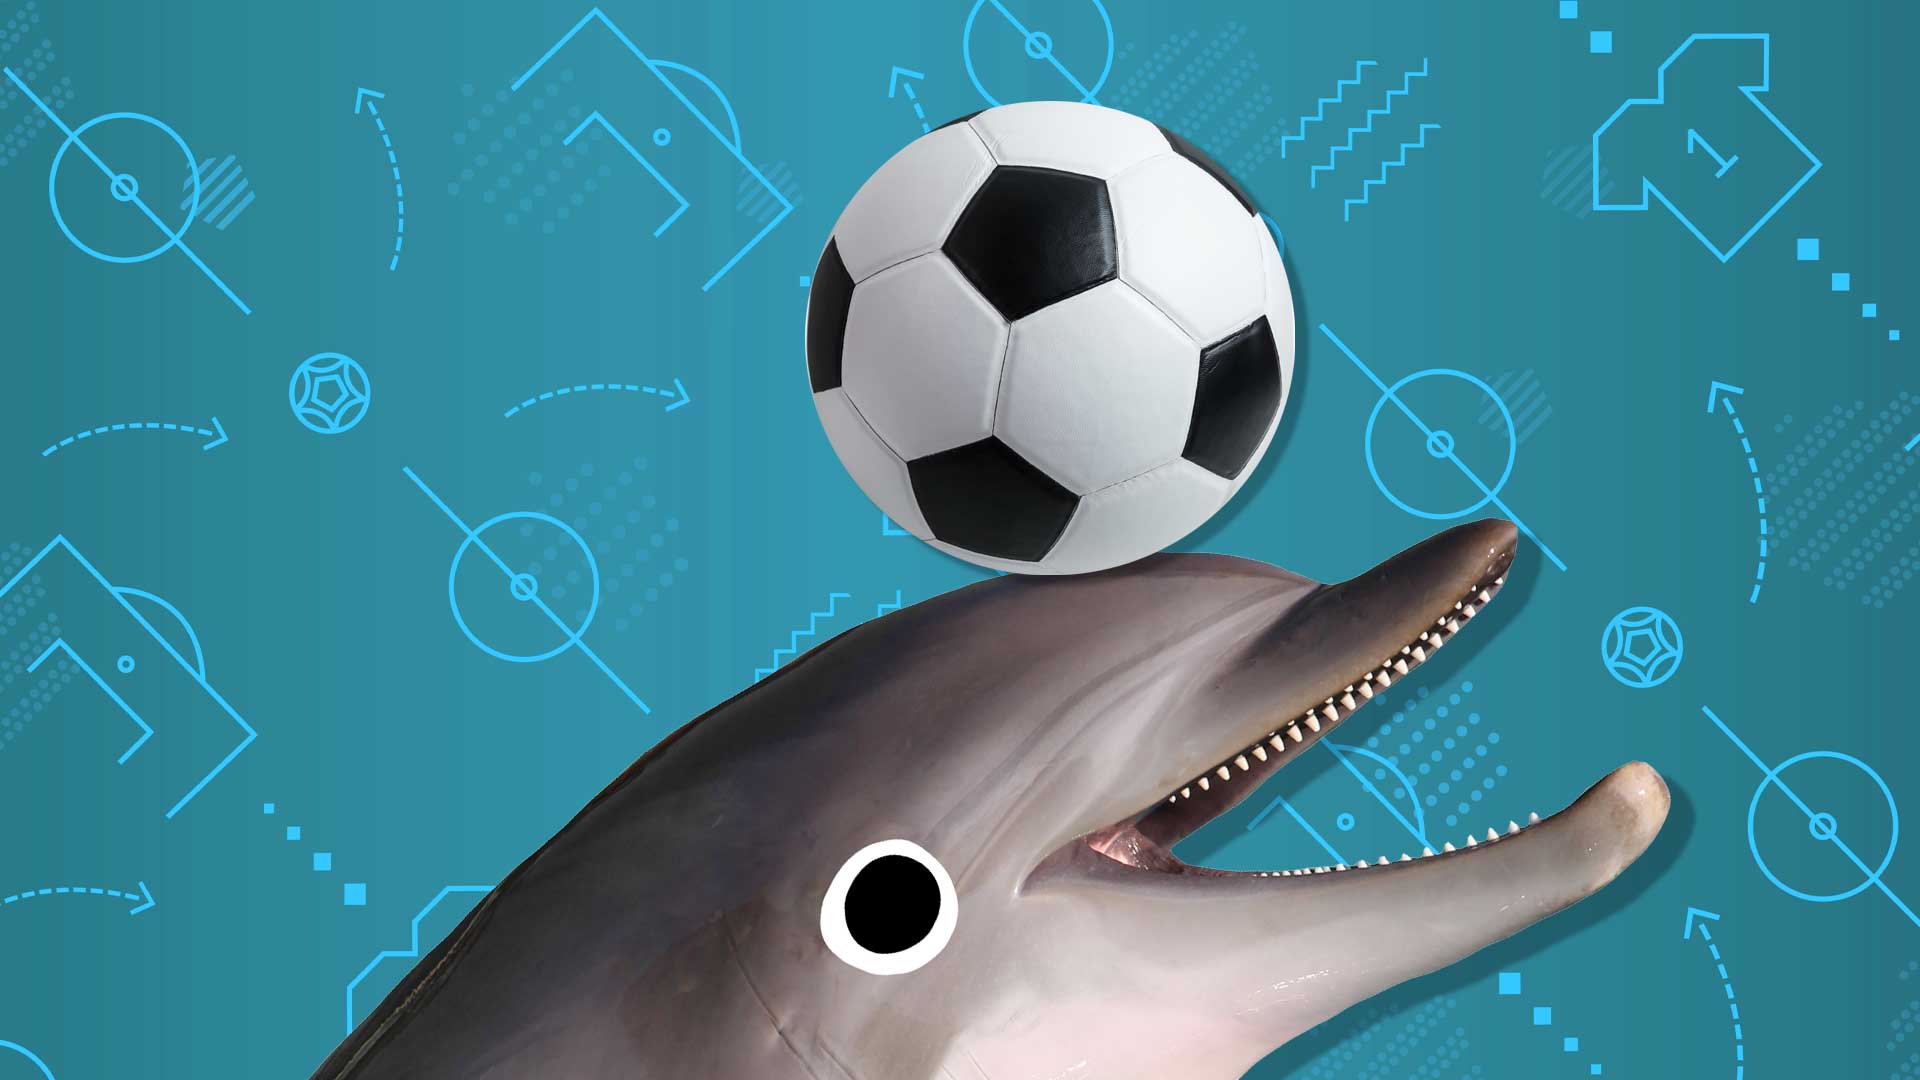 A dolphin balancing a football on its head